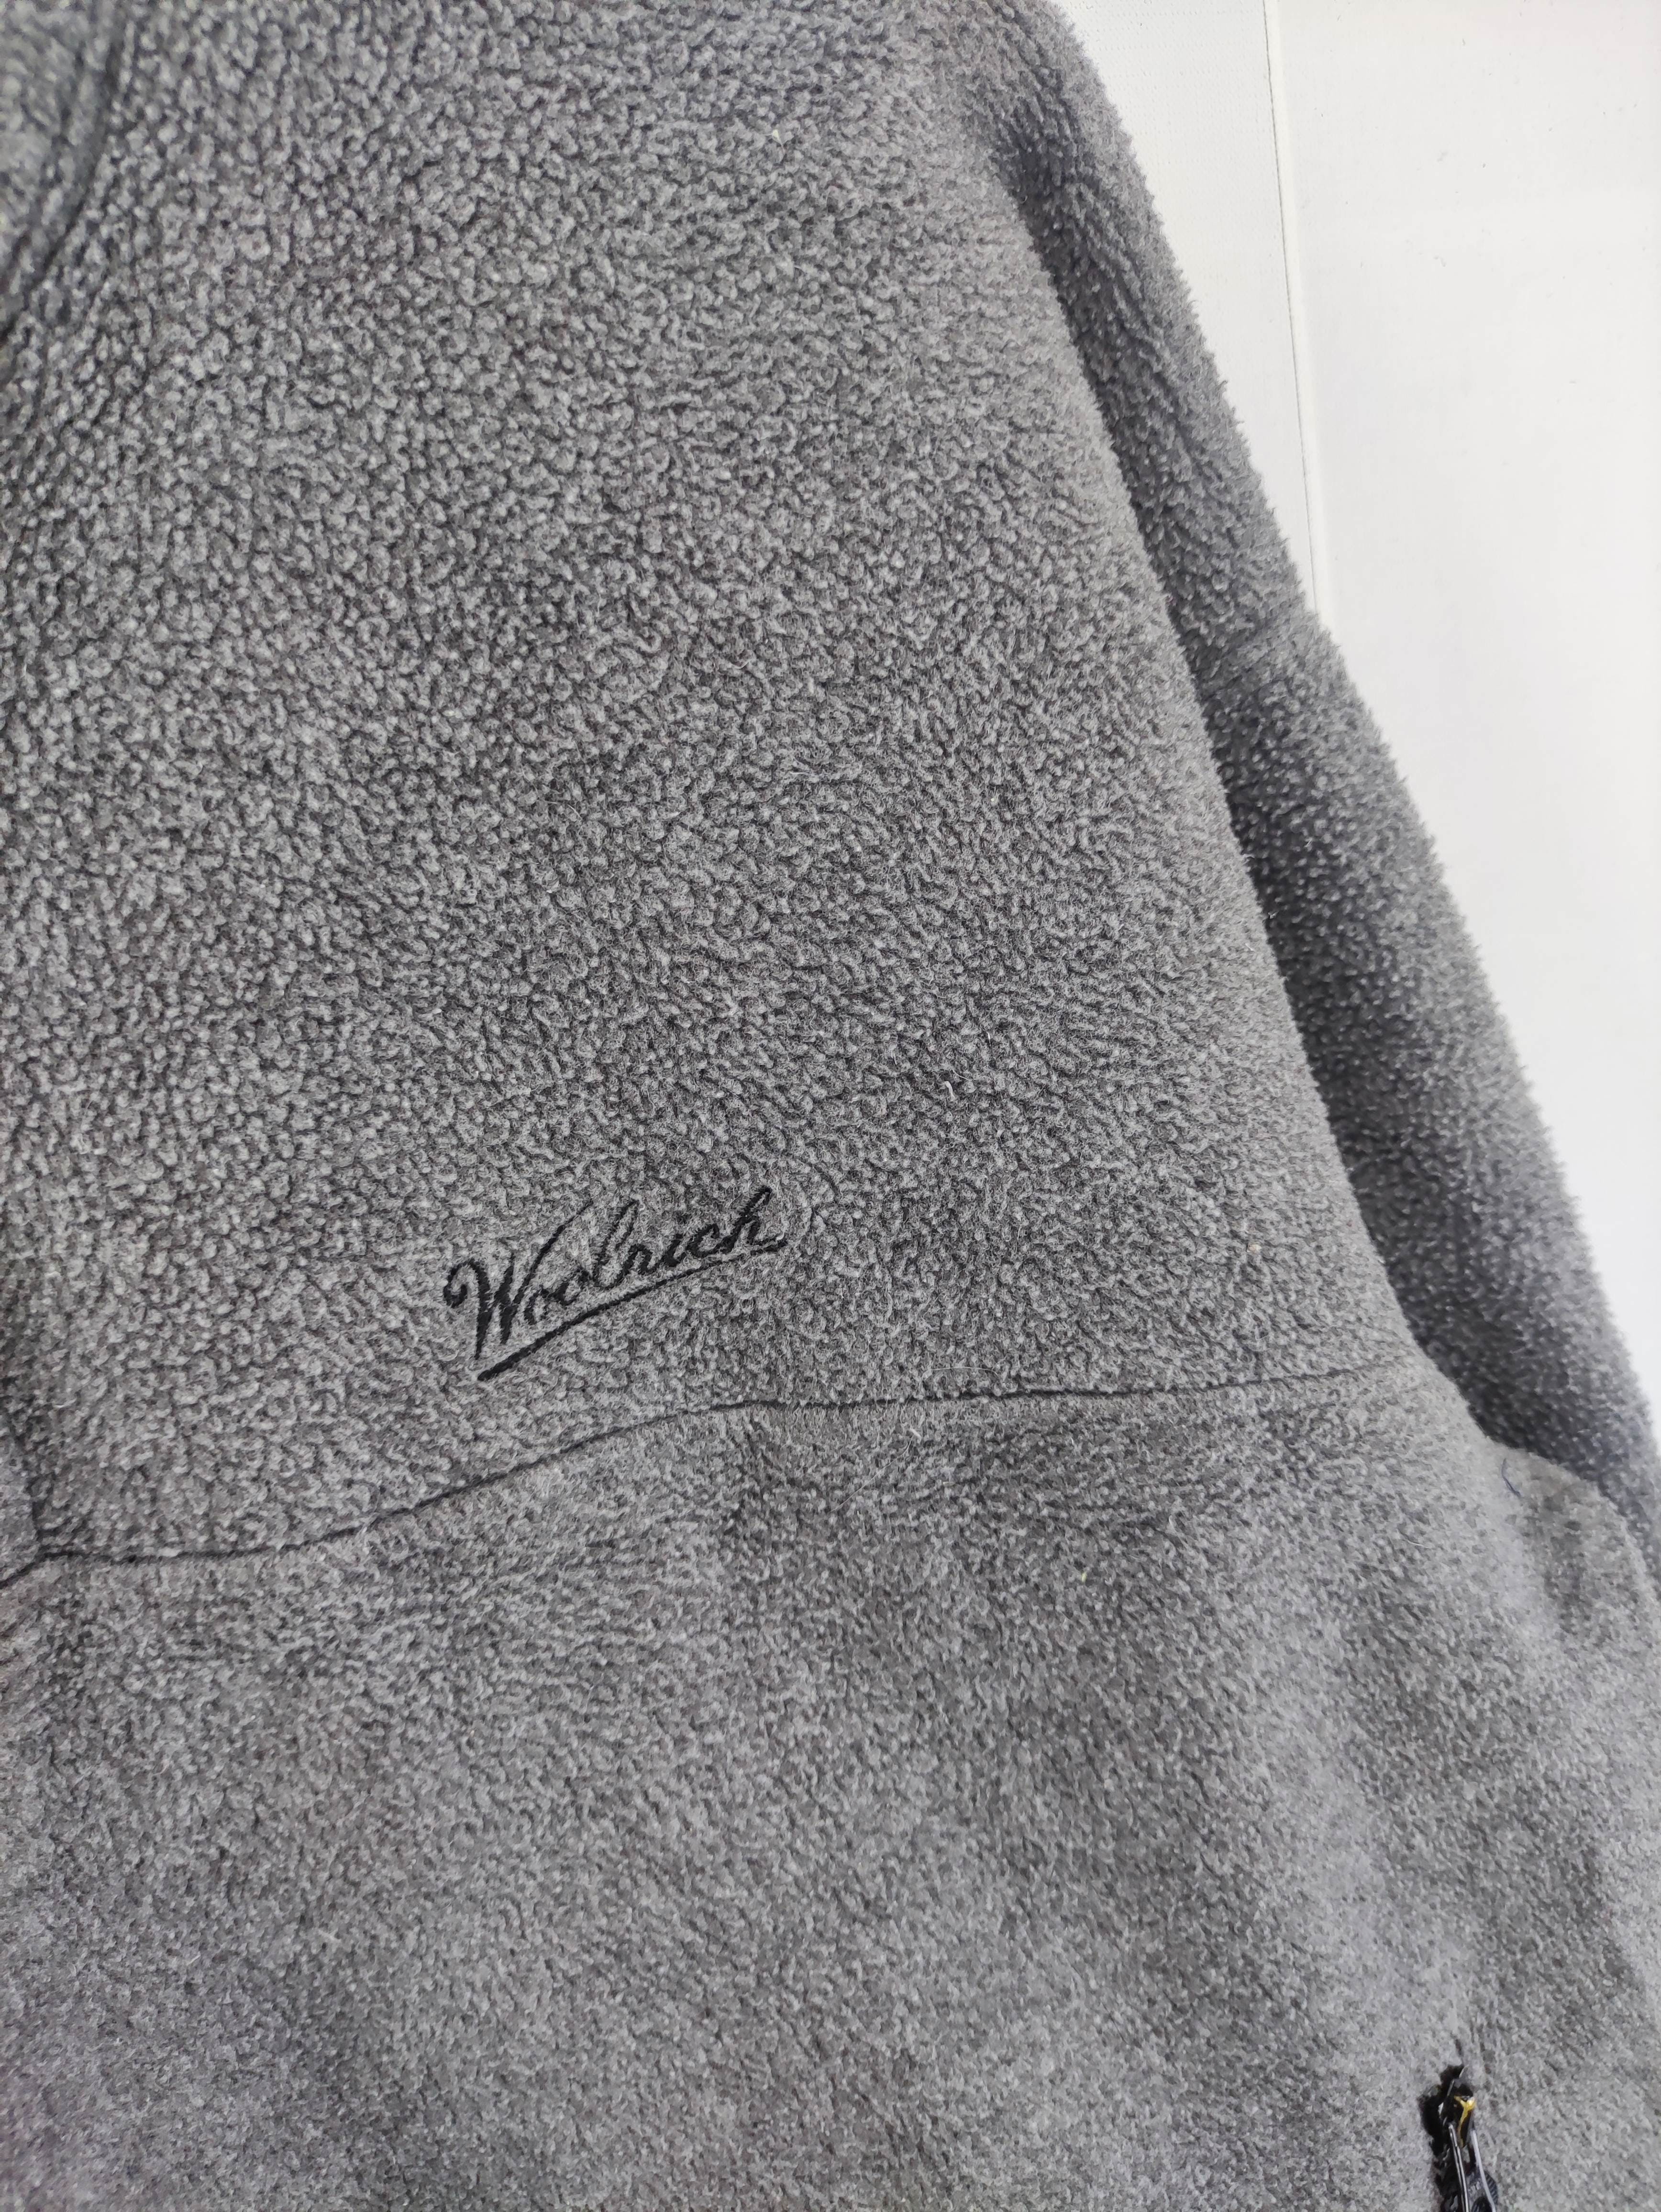 Vintage Woolrich Fleece Sweater Half Snap Button - 3